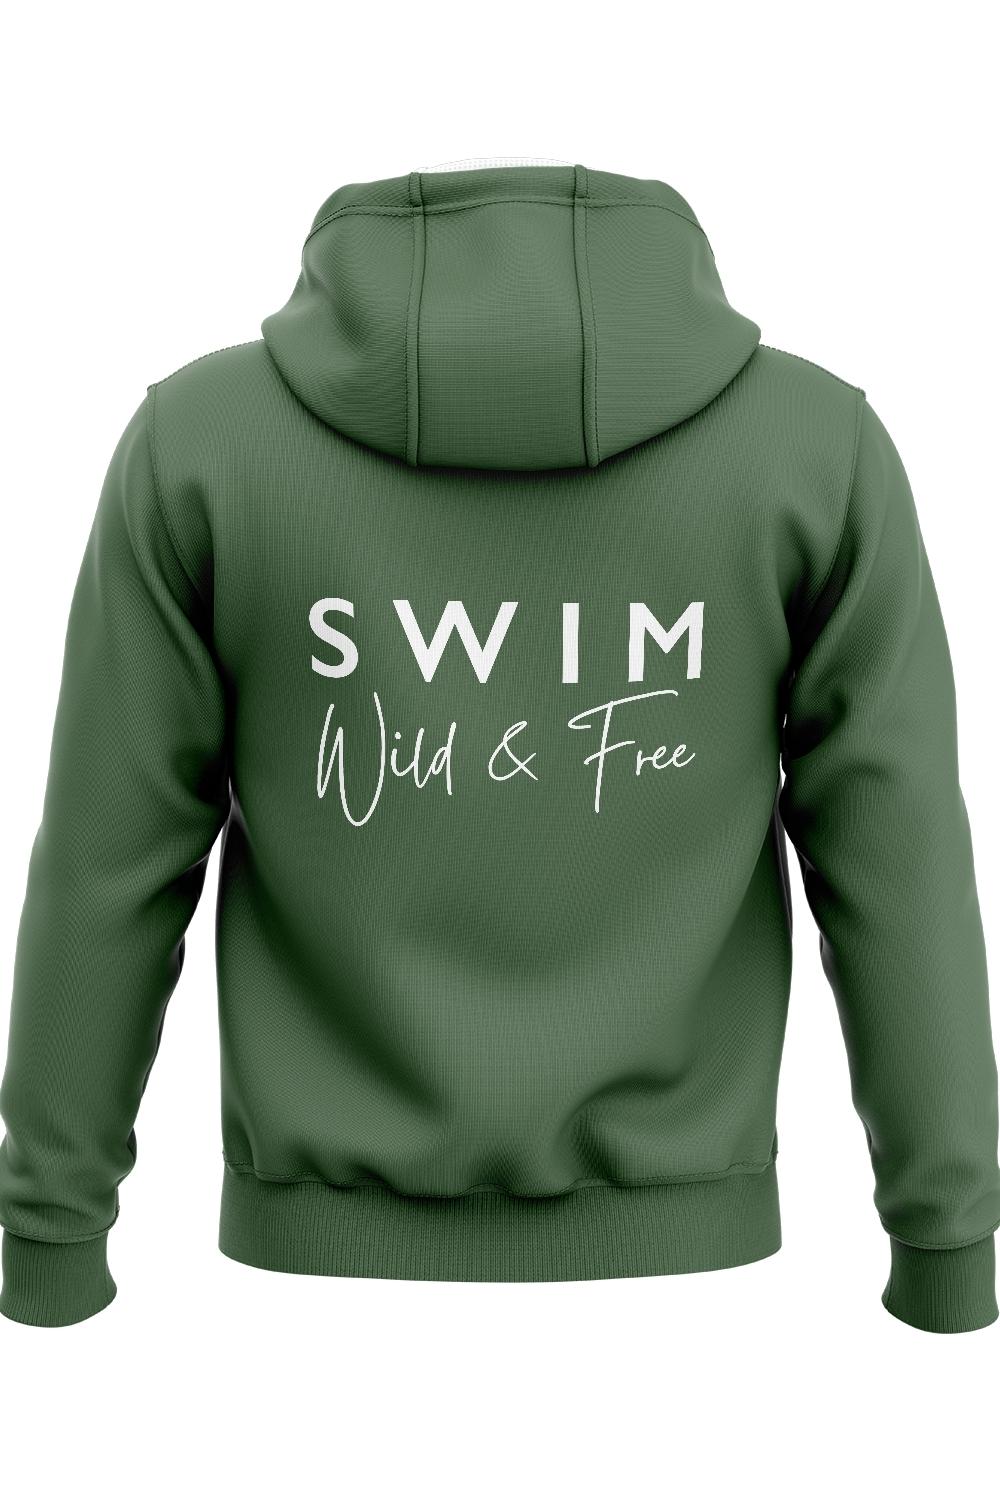 Swim Wild & Free Unisex Organic Pop-Over Hoodie